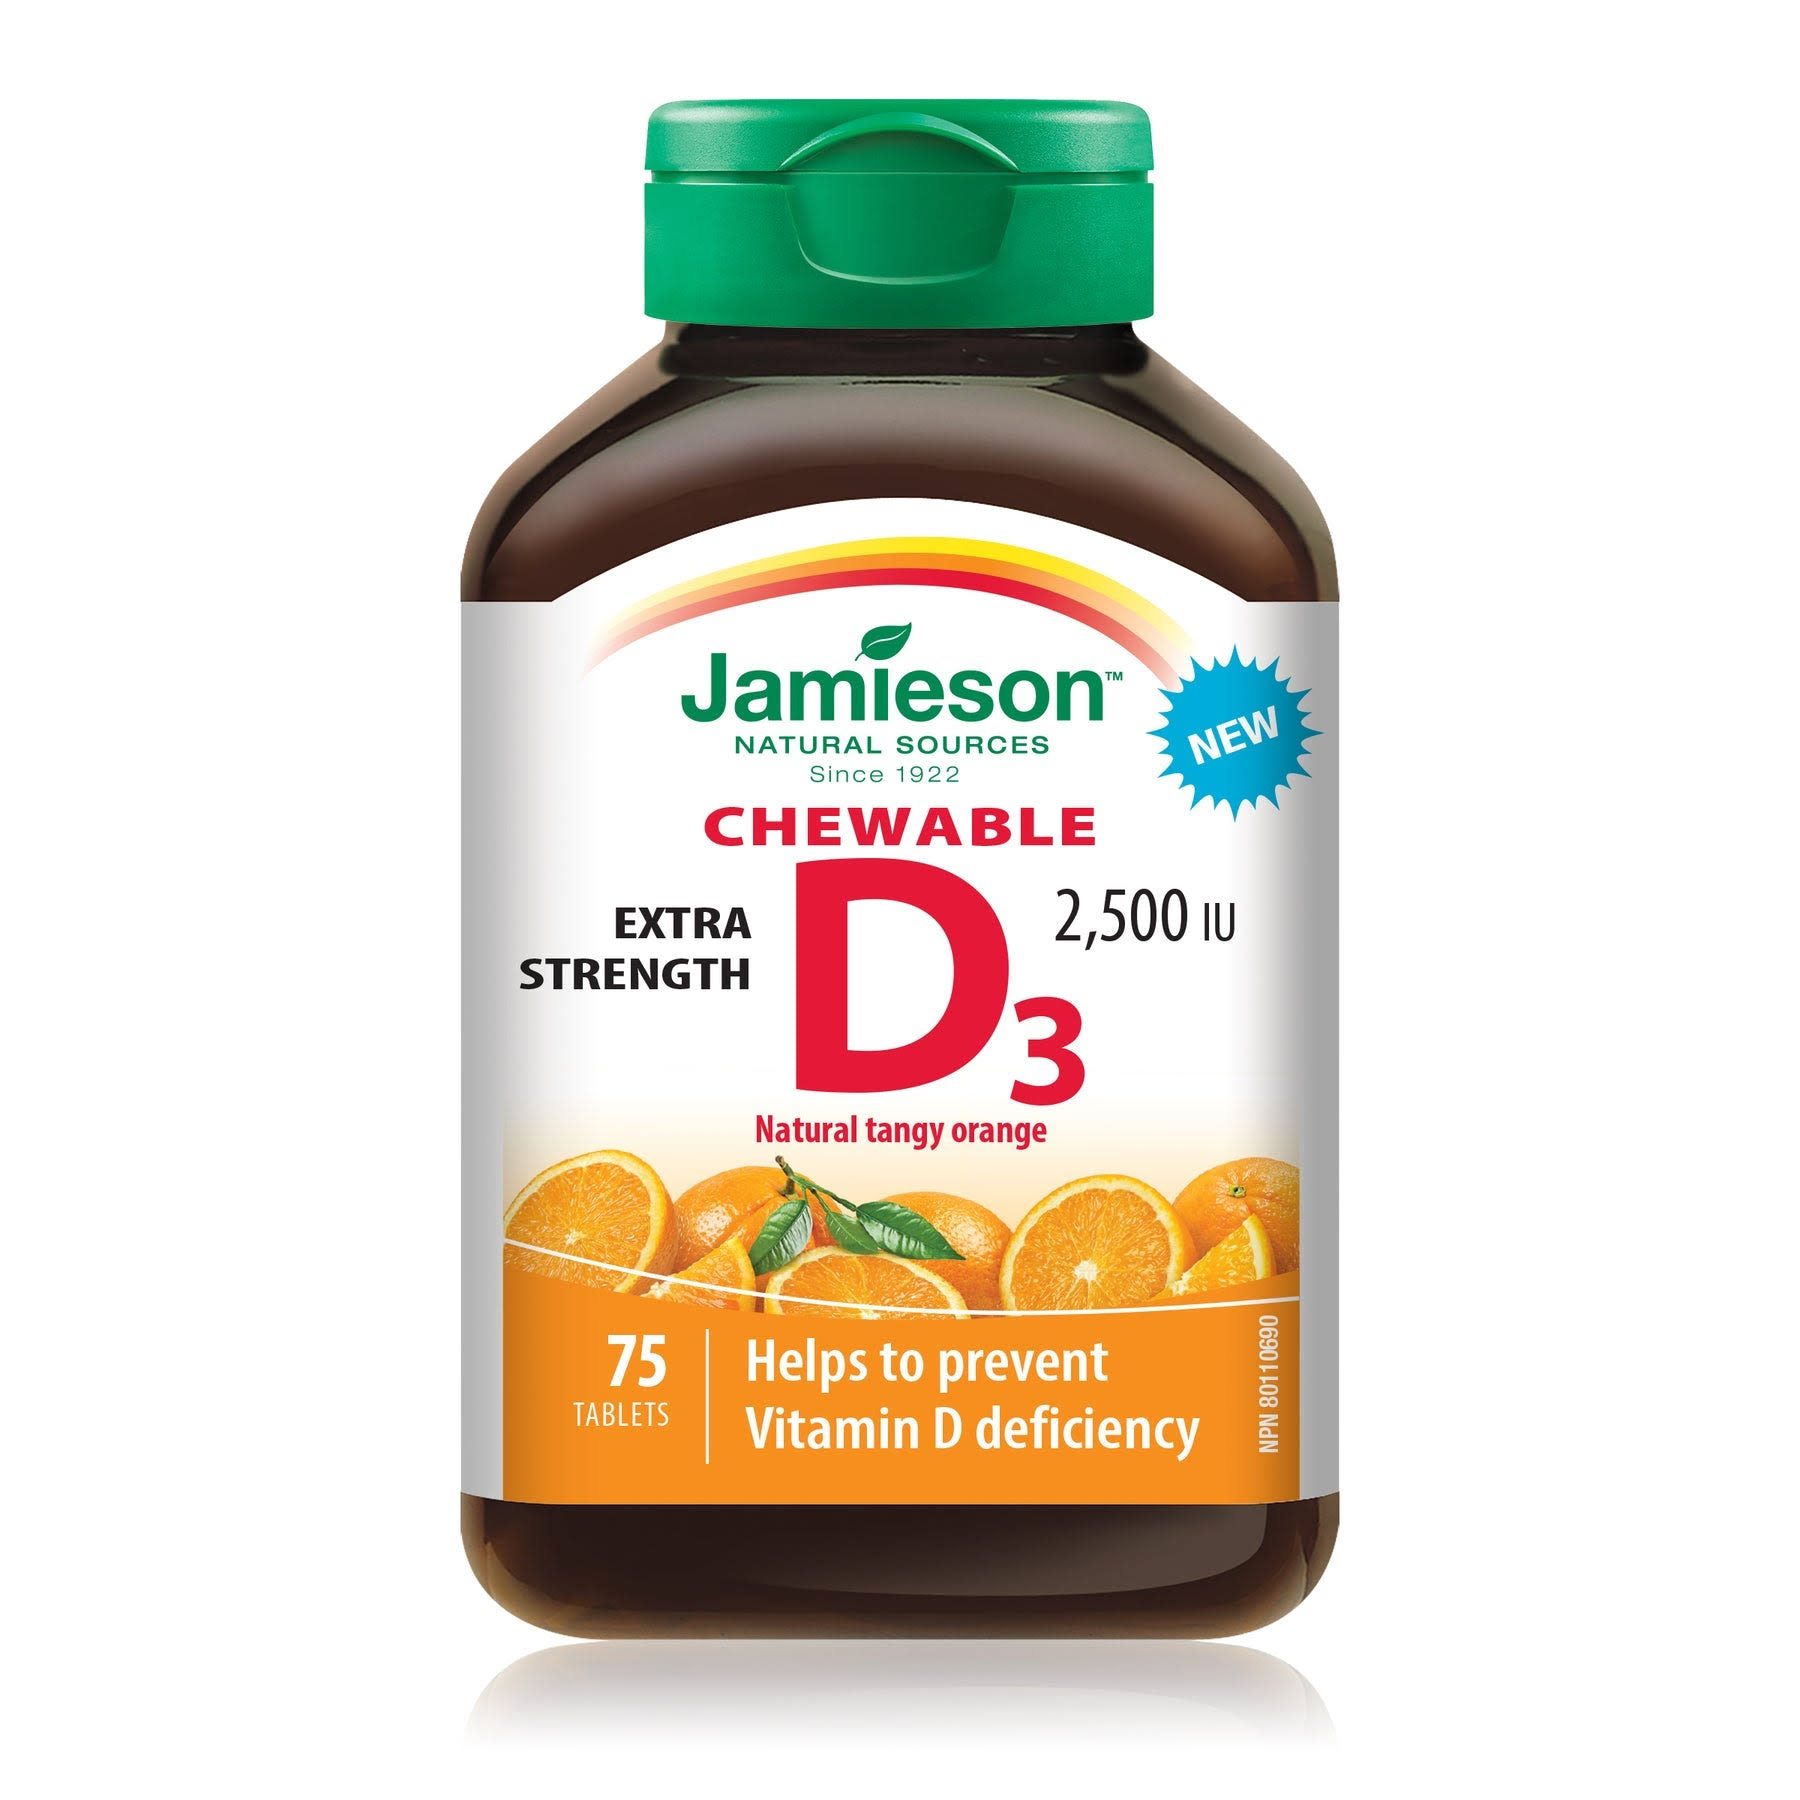 Jamieson Chewable Vitamin D3 2500 IU Extra Strength (75 Tablets)